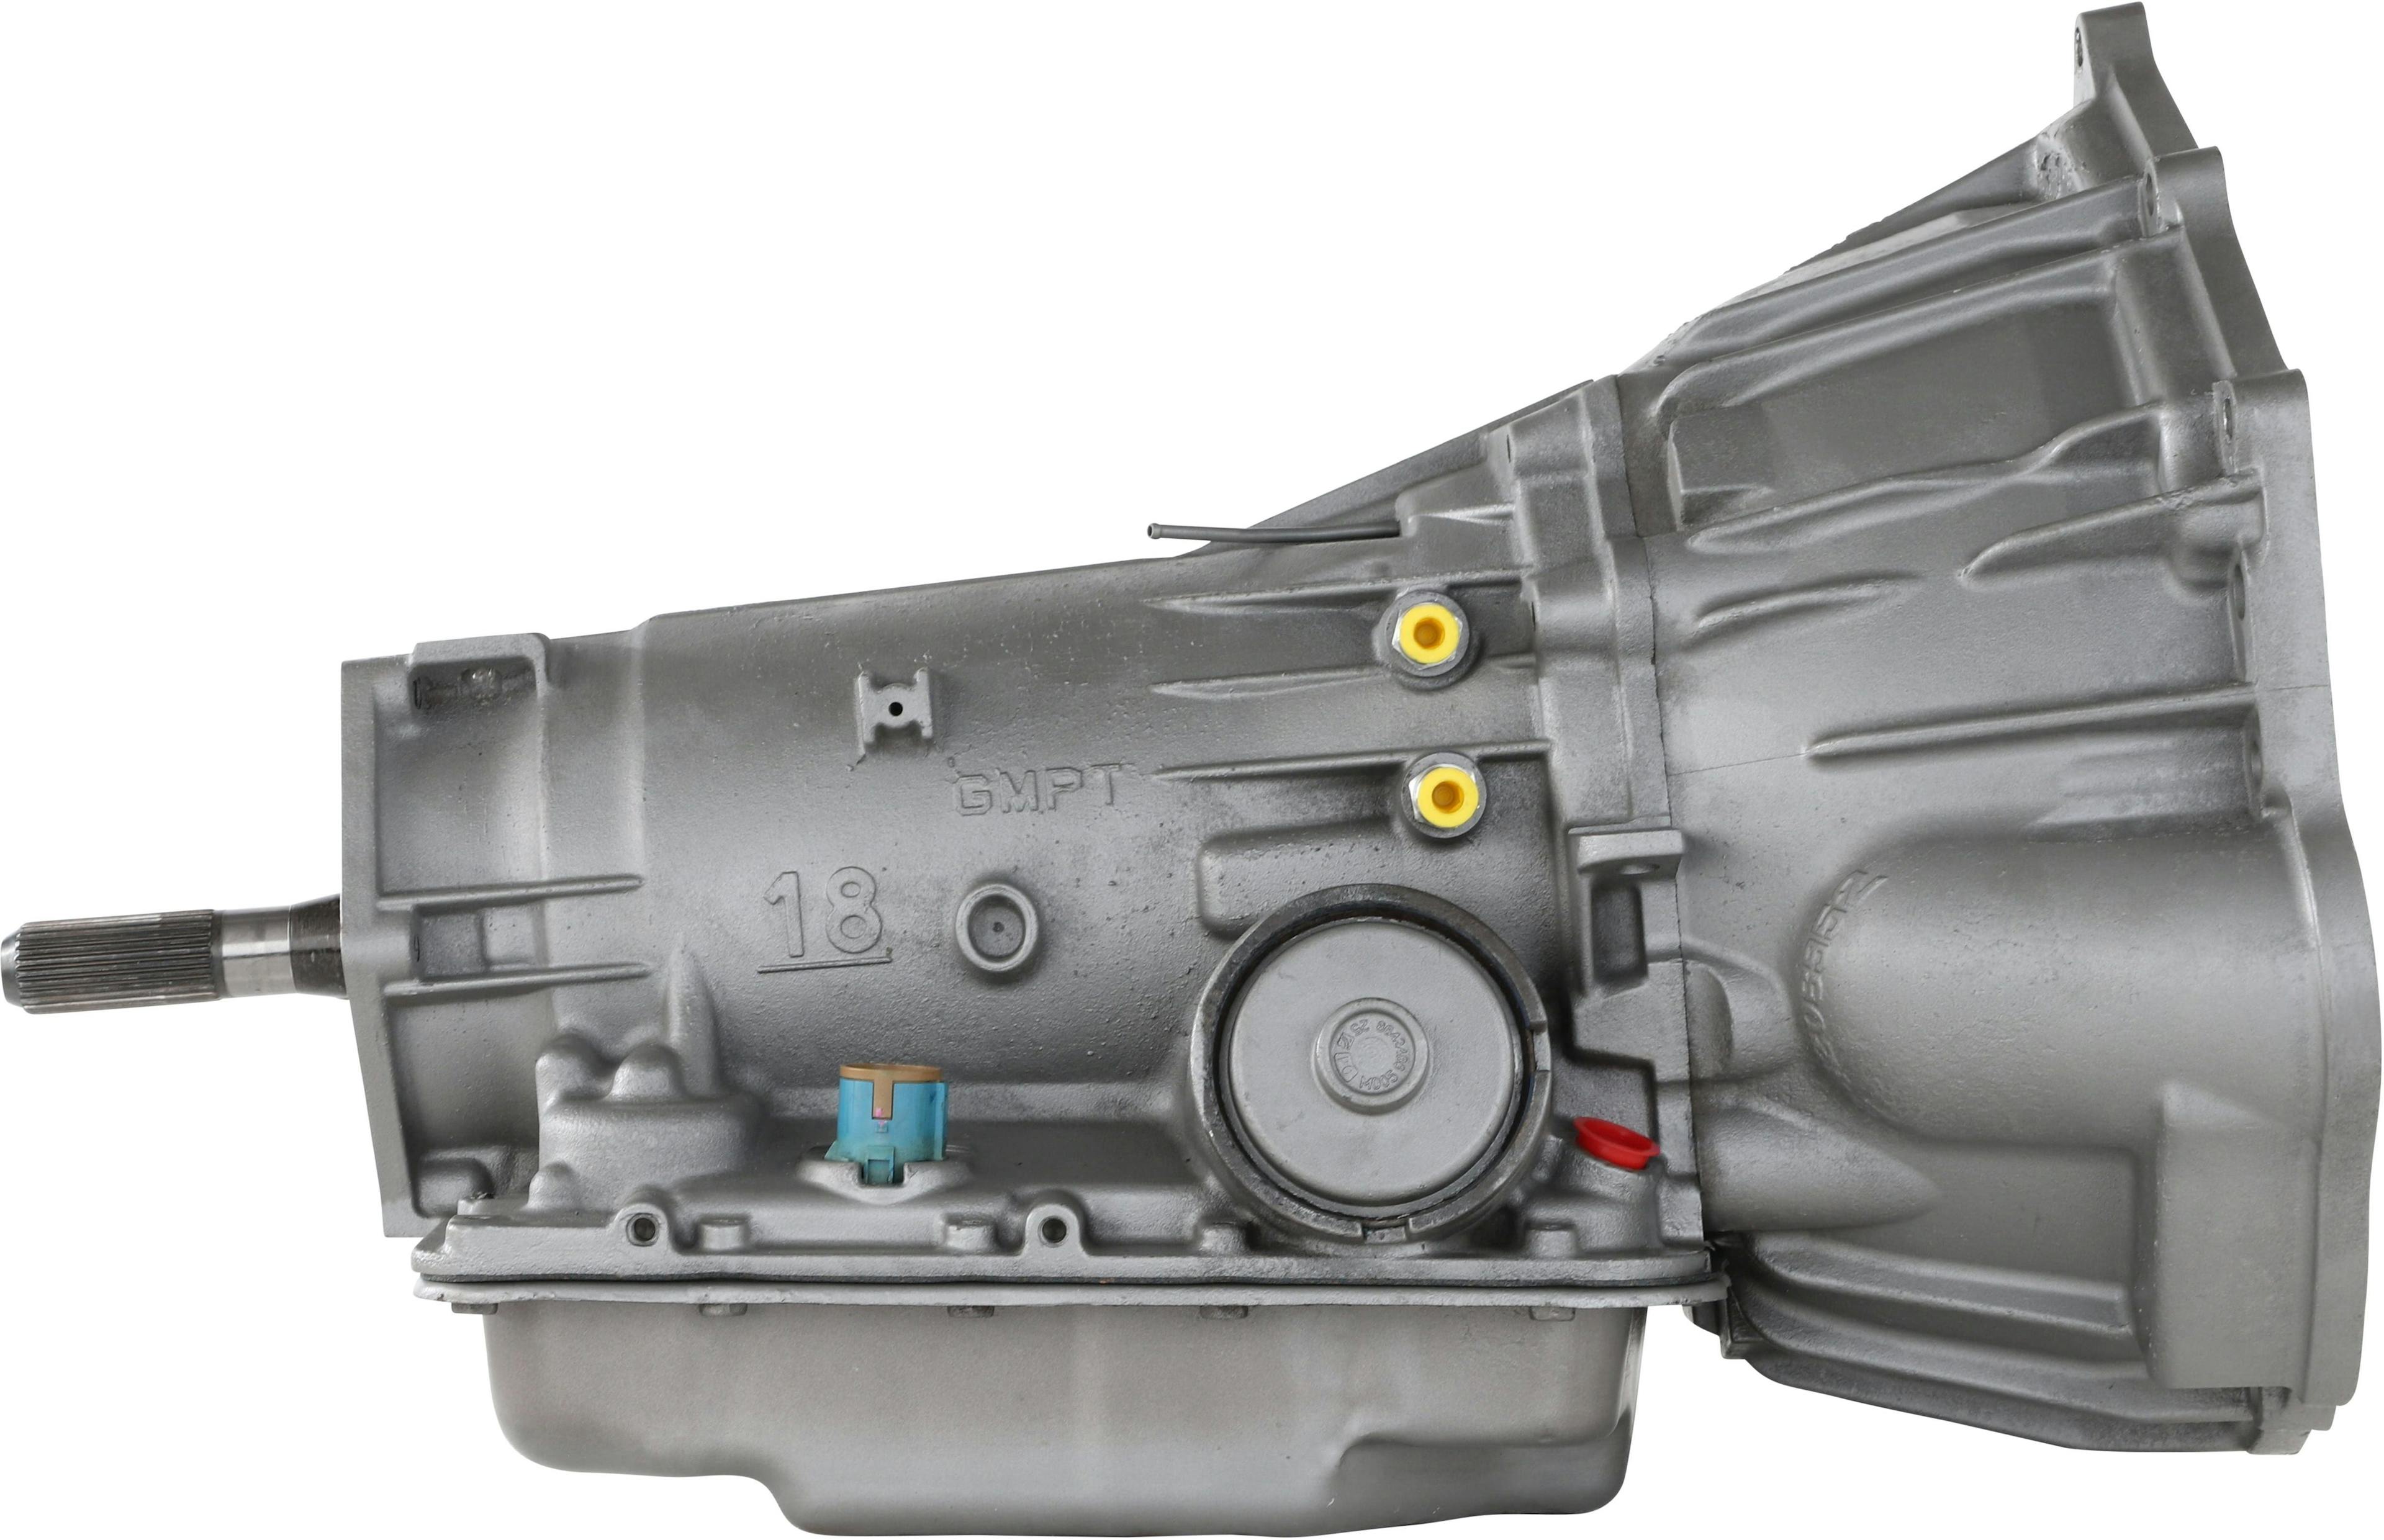 Automatic Transmission for 2010-2013 Chevrolet Silverado 1500/GMC Sierra 1500 4WD with 4.3L V6 Engine